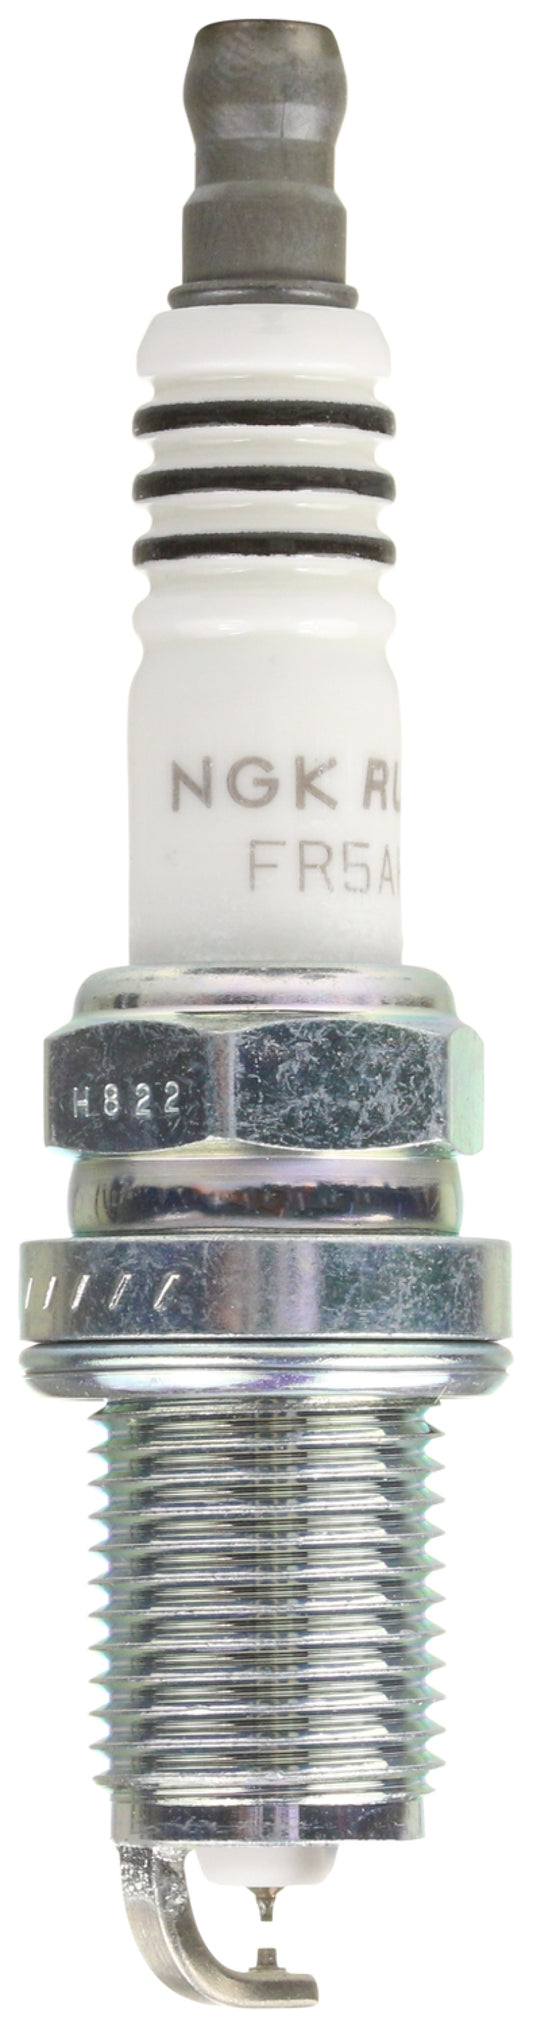 NGK Ruthenium HX Spark Plug Box of 4 (FR5AHX-E)